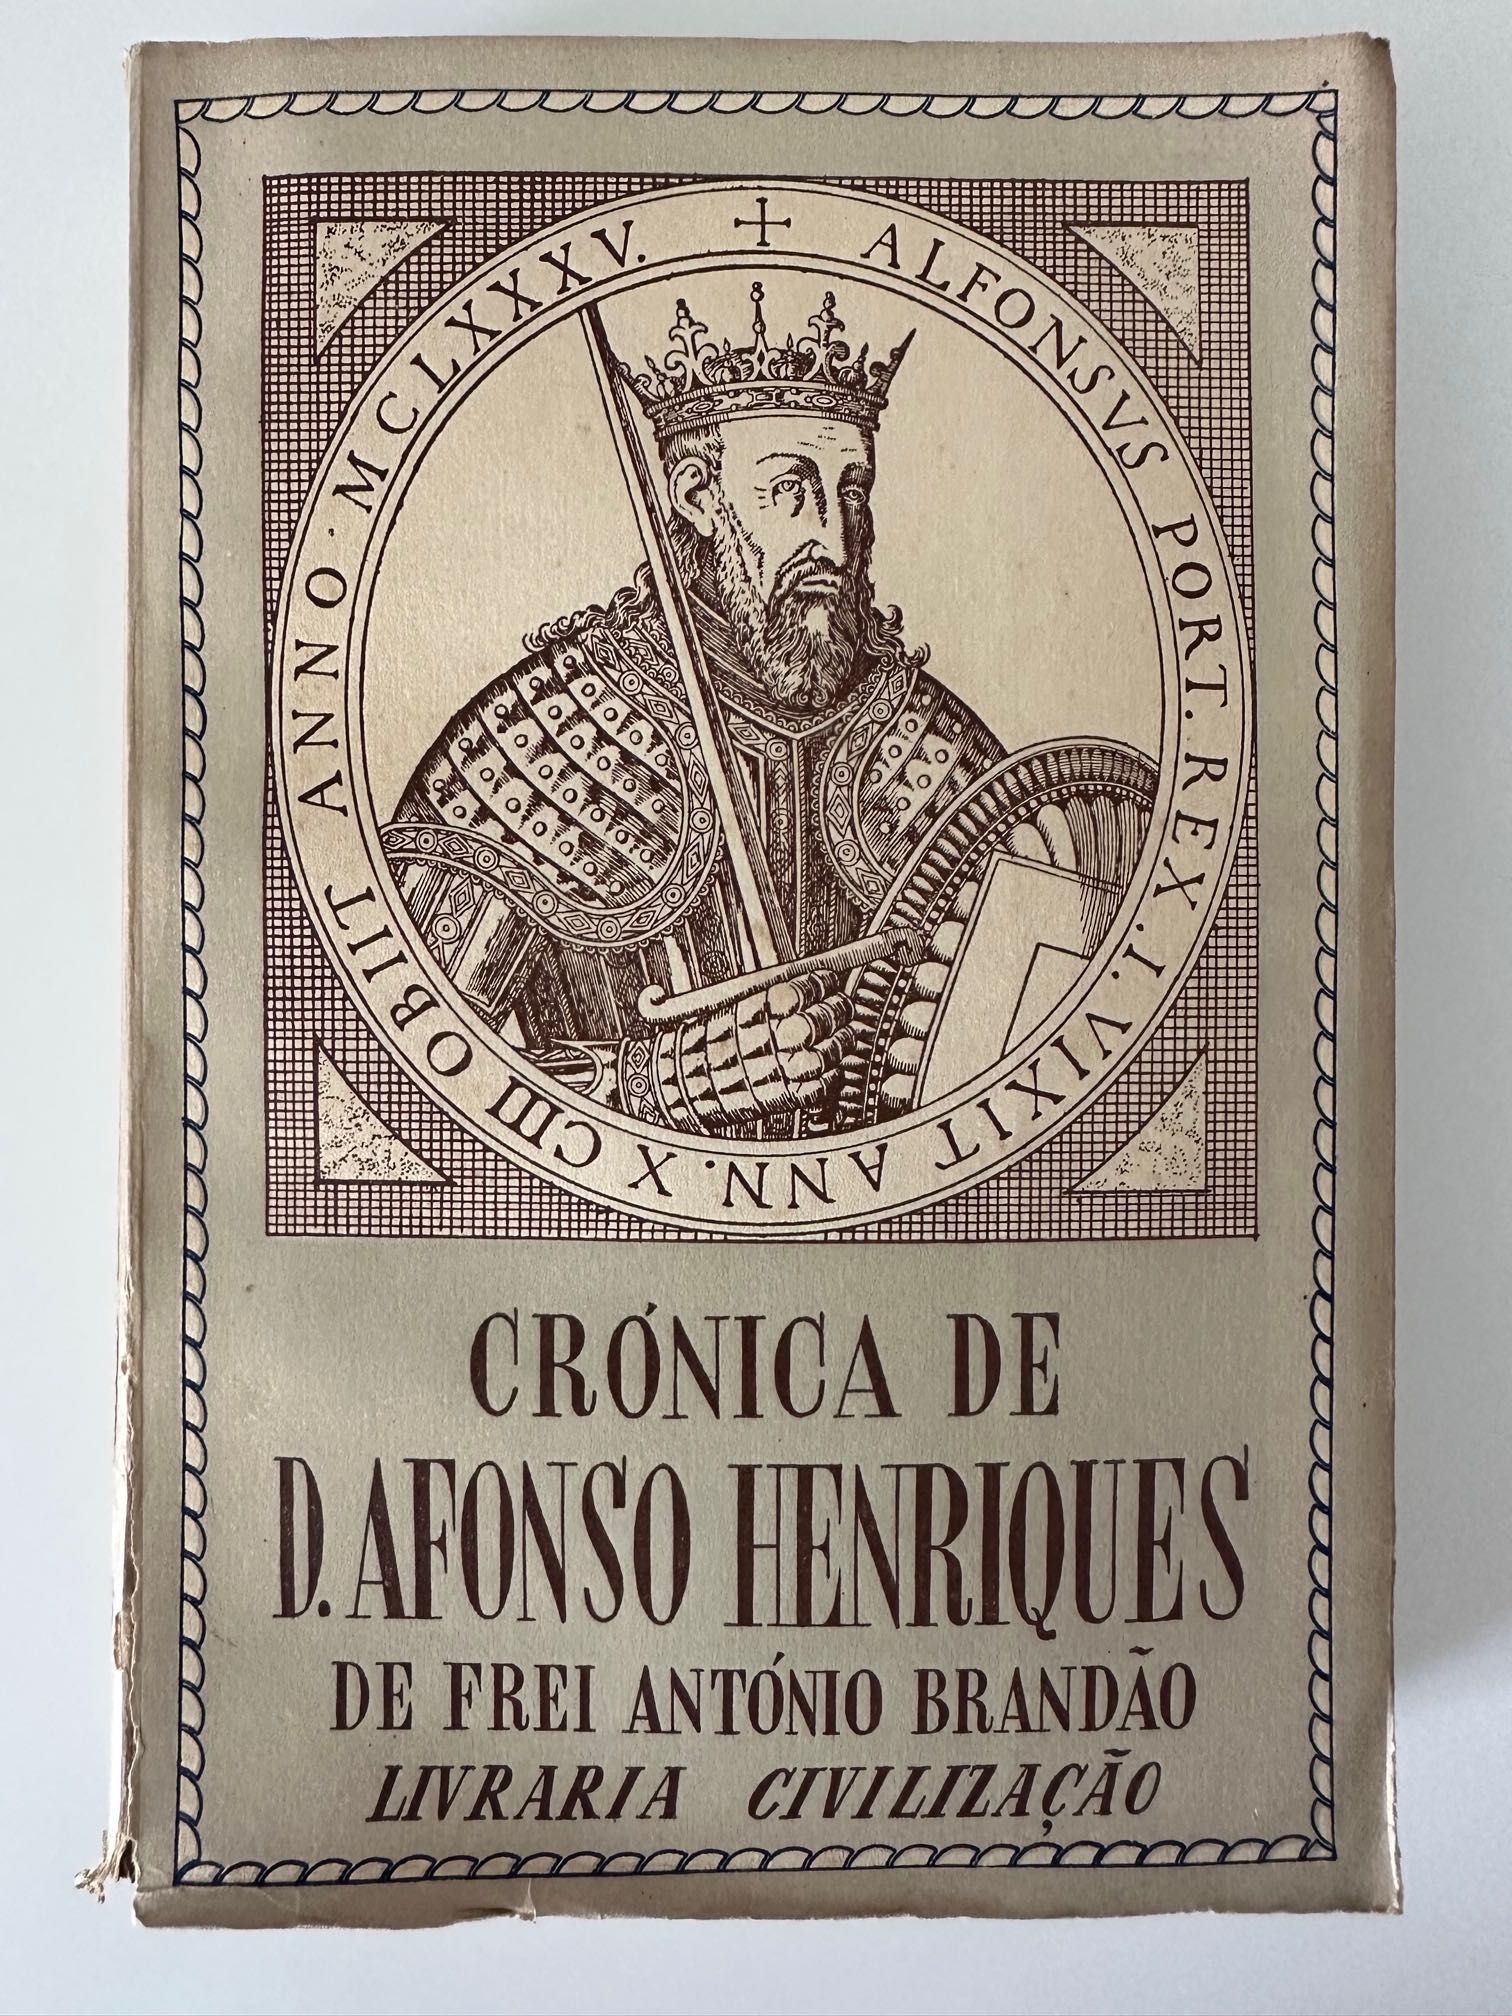 Crónica de D. Afonso Henriques - Frei António Brandão